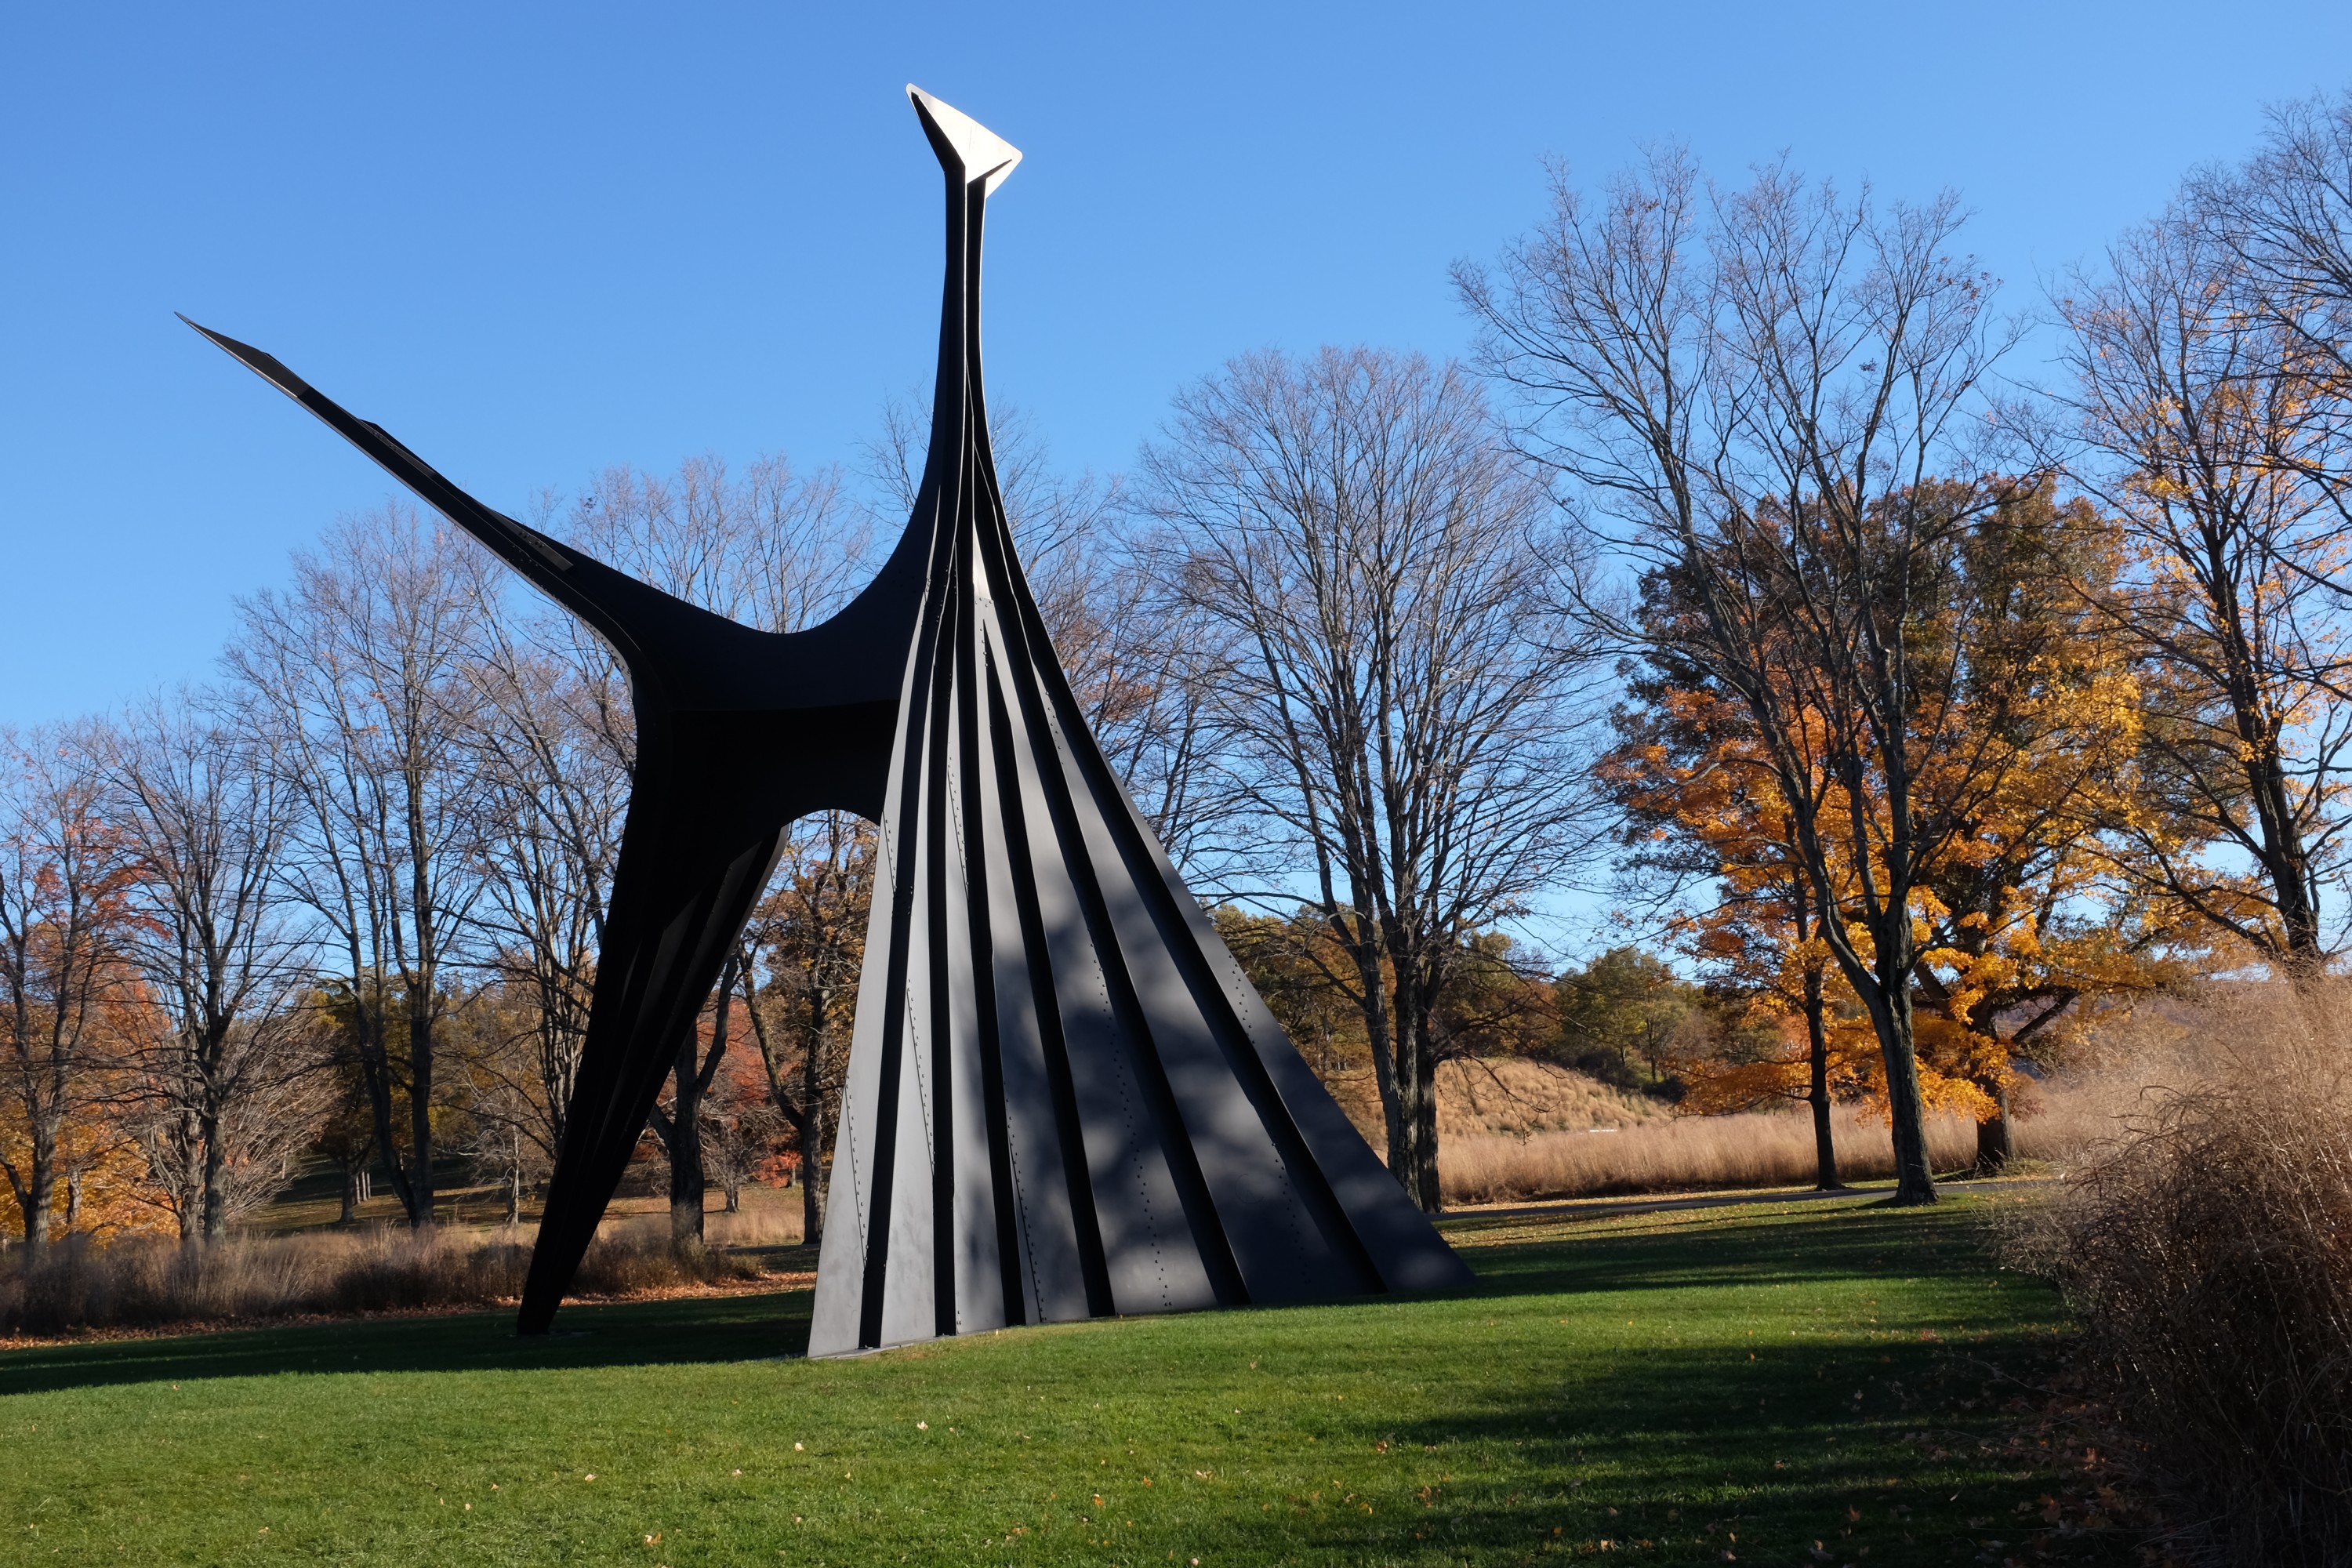 Arch, sculpture by Alexander Calder